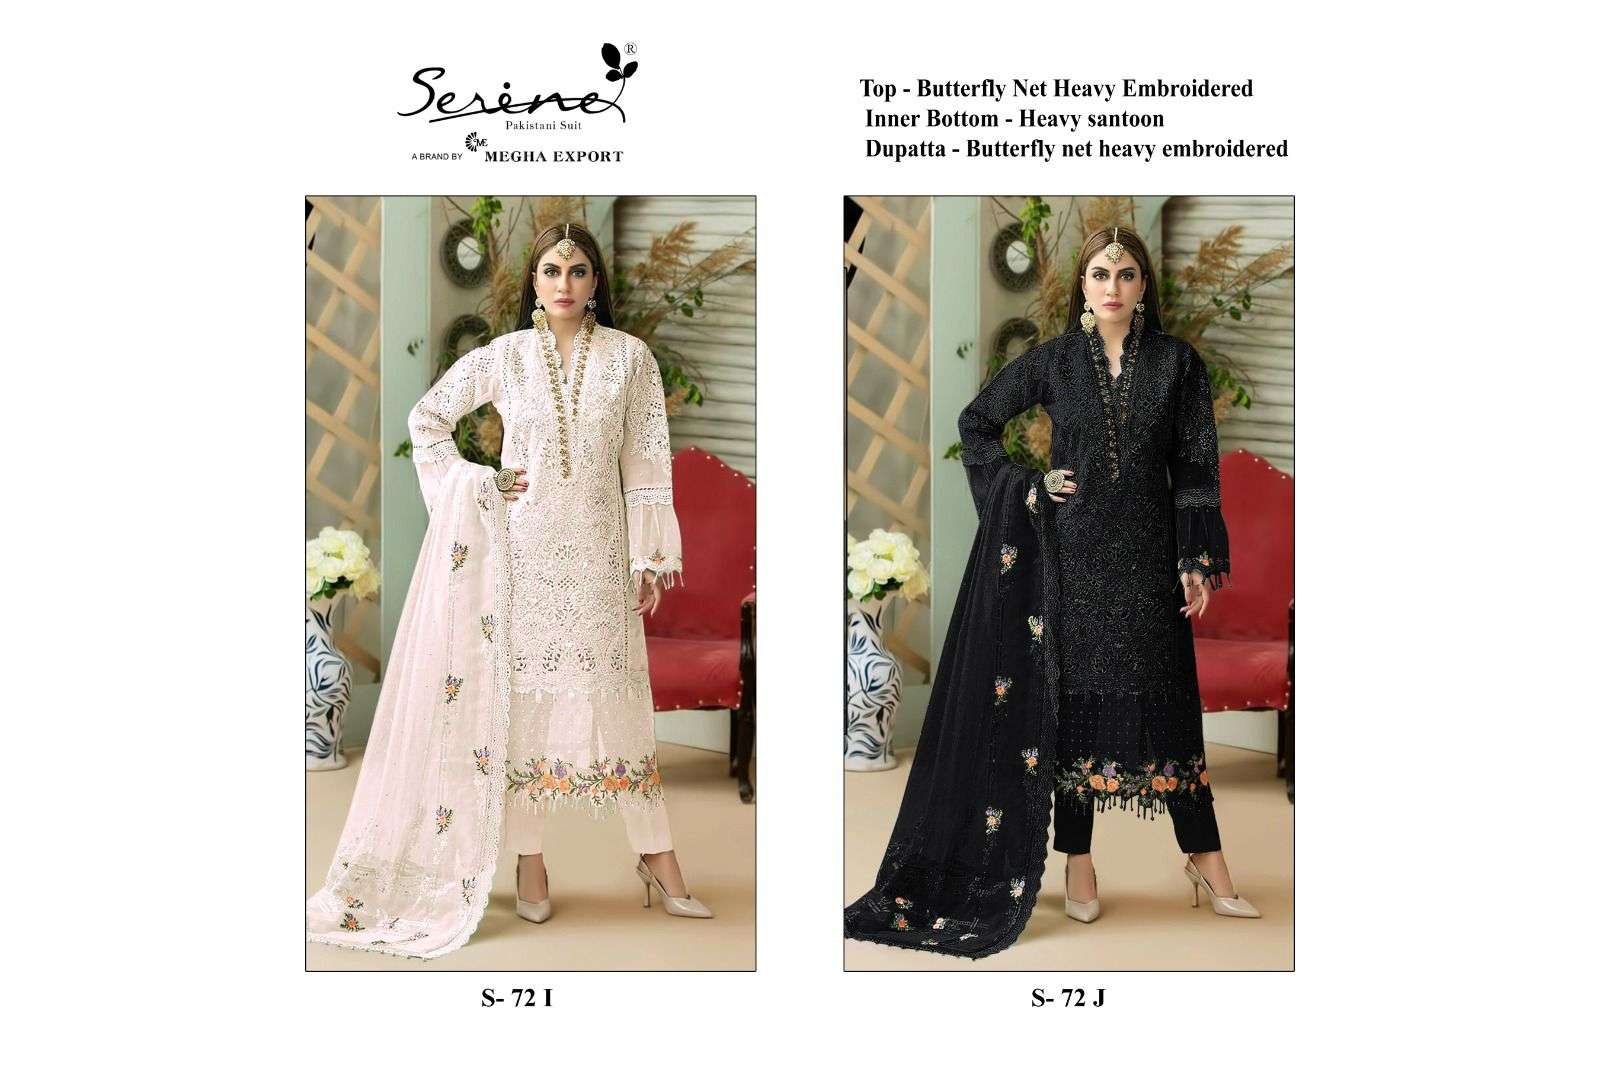 serine 72 new colours stylish look designer pakistani salwar suits wholesale price surat